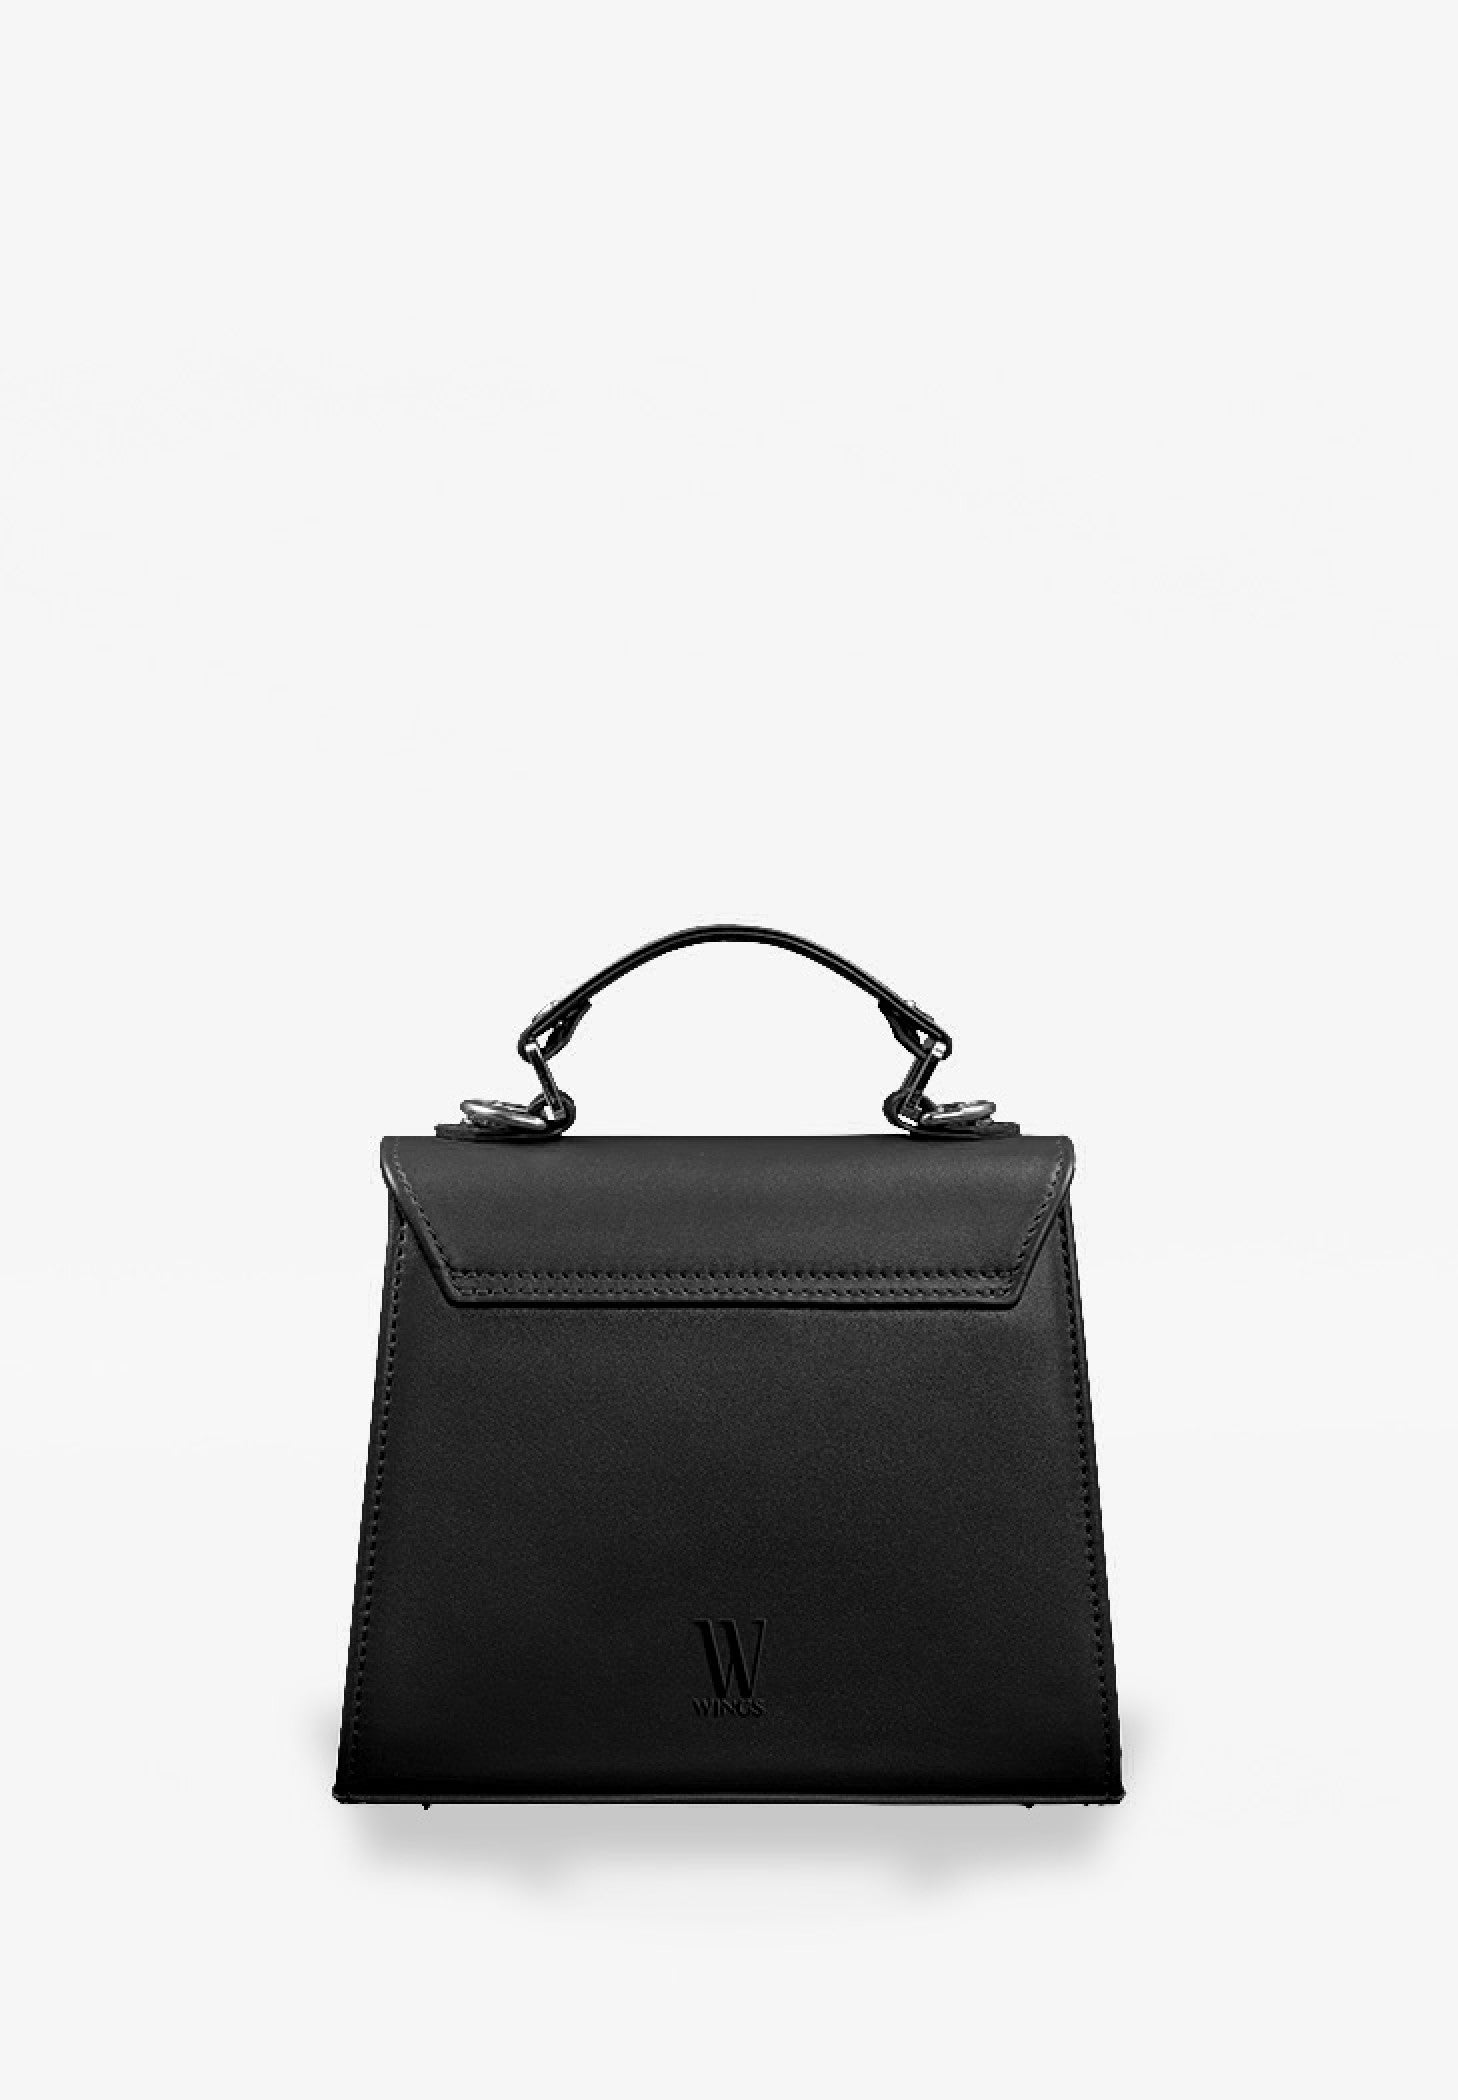 elegant leather black bag for women